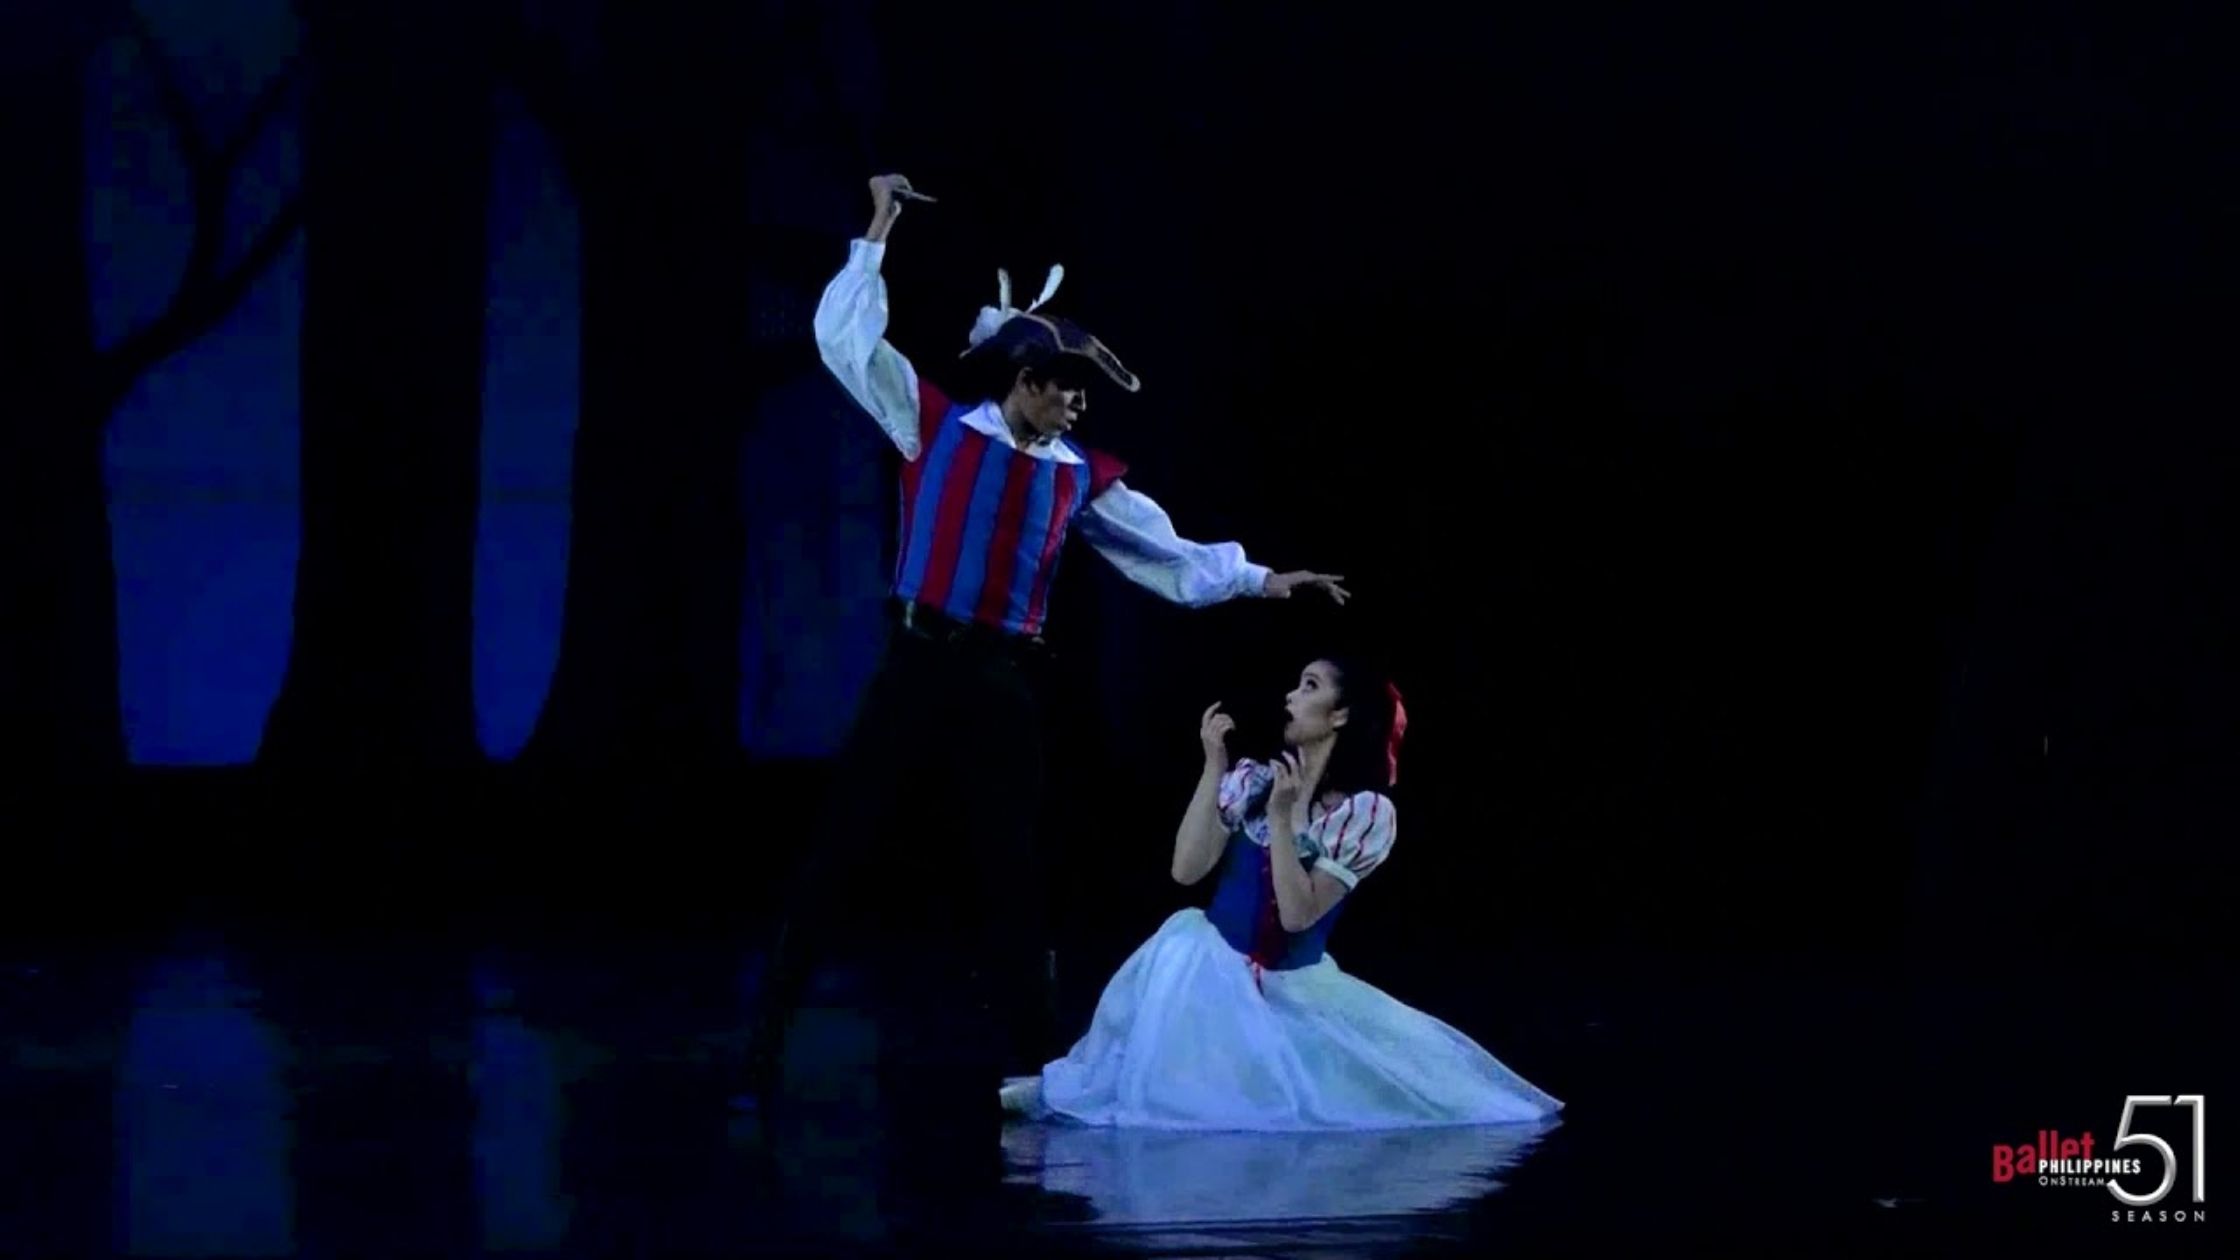 Ballet Philippines' Snow White